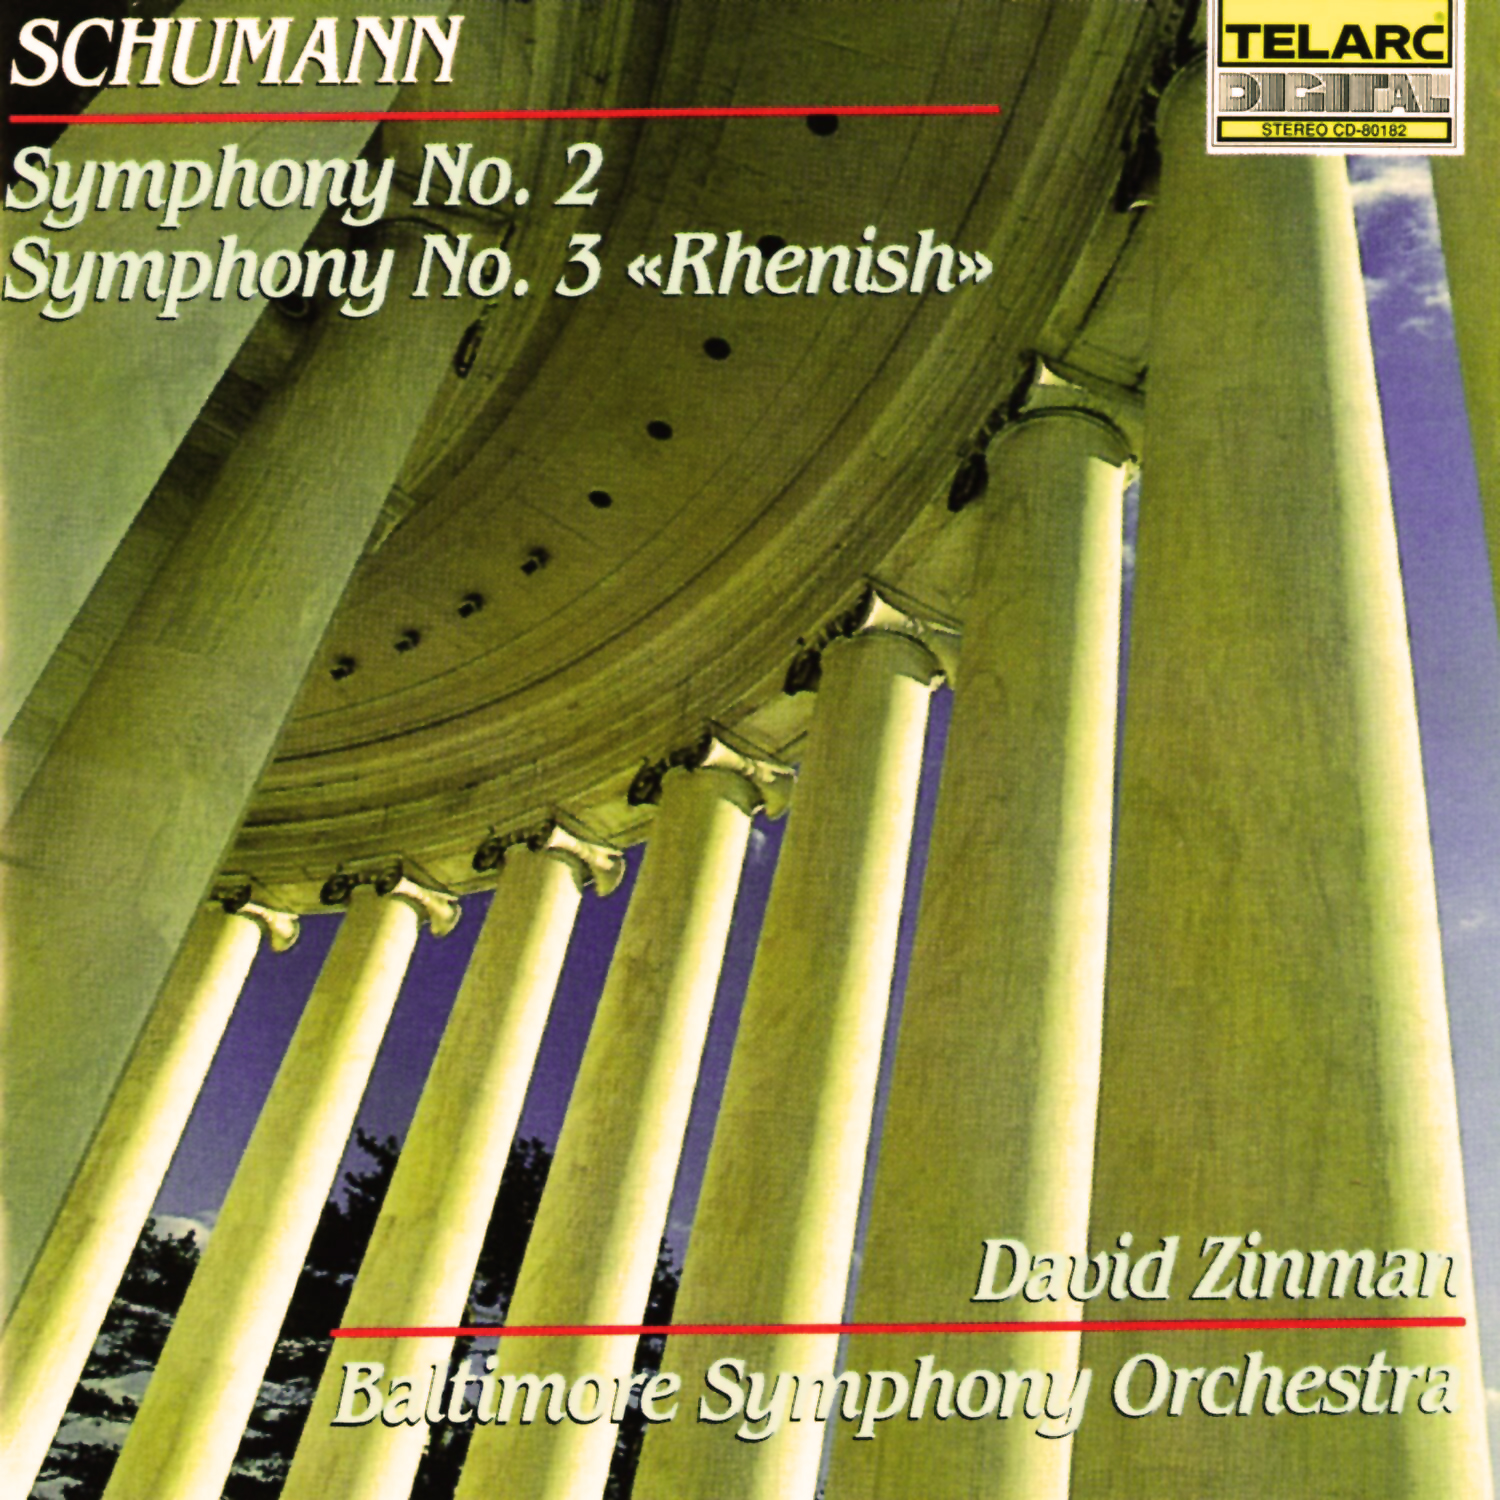 Symphony No. 2 in C major: I. Sostenuto assai